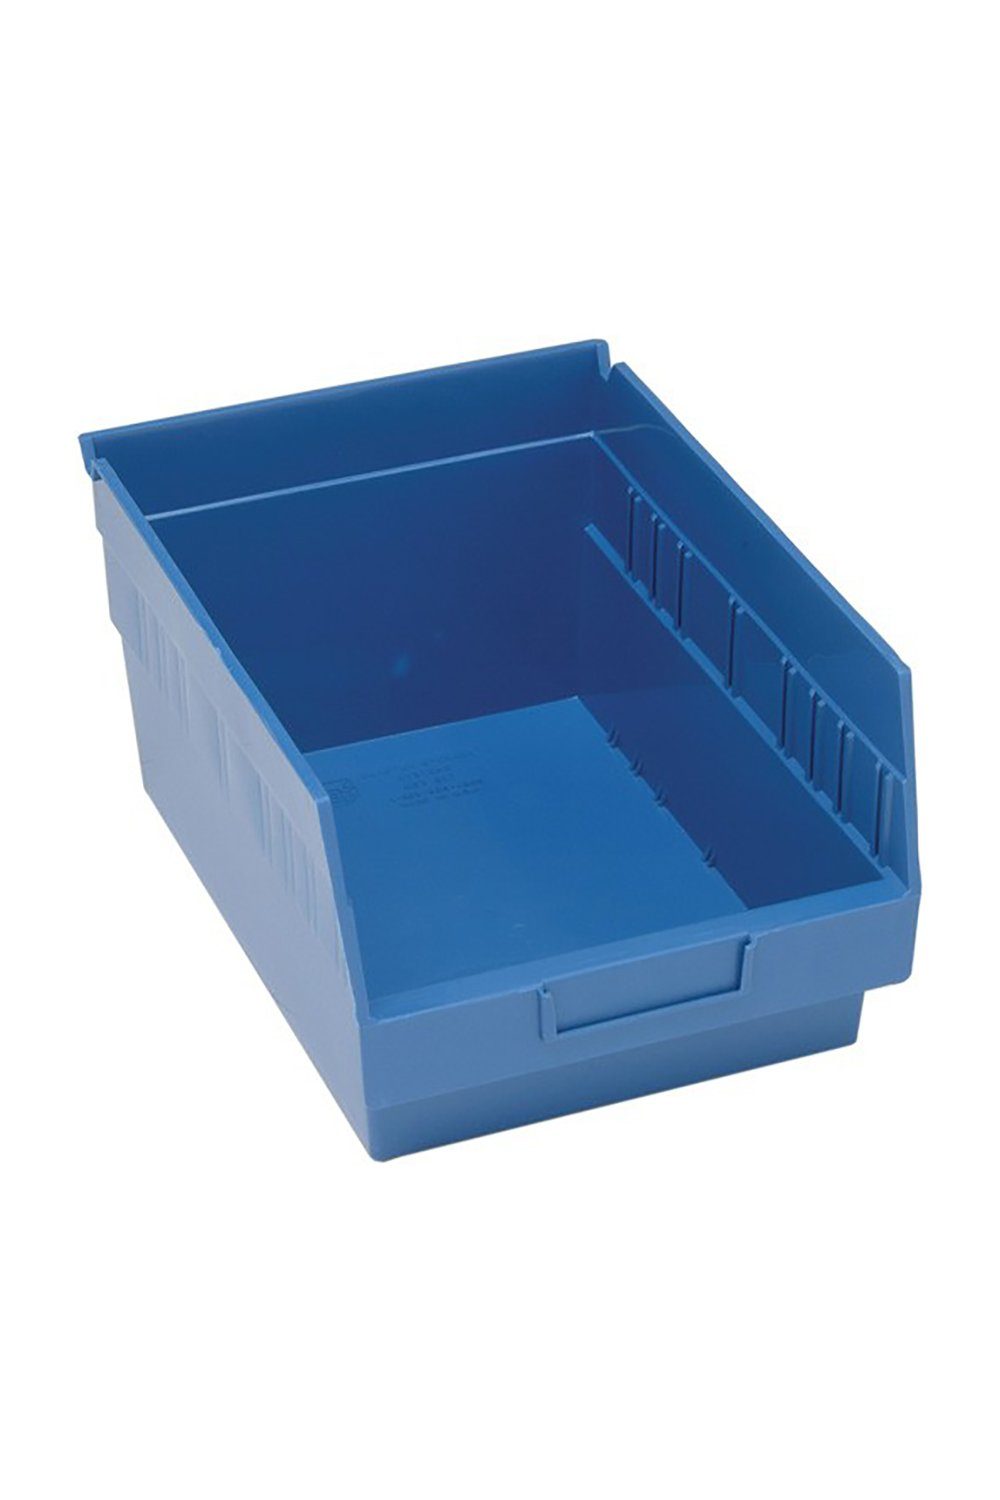 Shelf Bin for 12"D Shelves Bins & Containers Acart 11-5/8'' x 8-3/8'' x 6'' Blue 